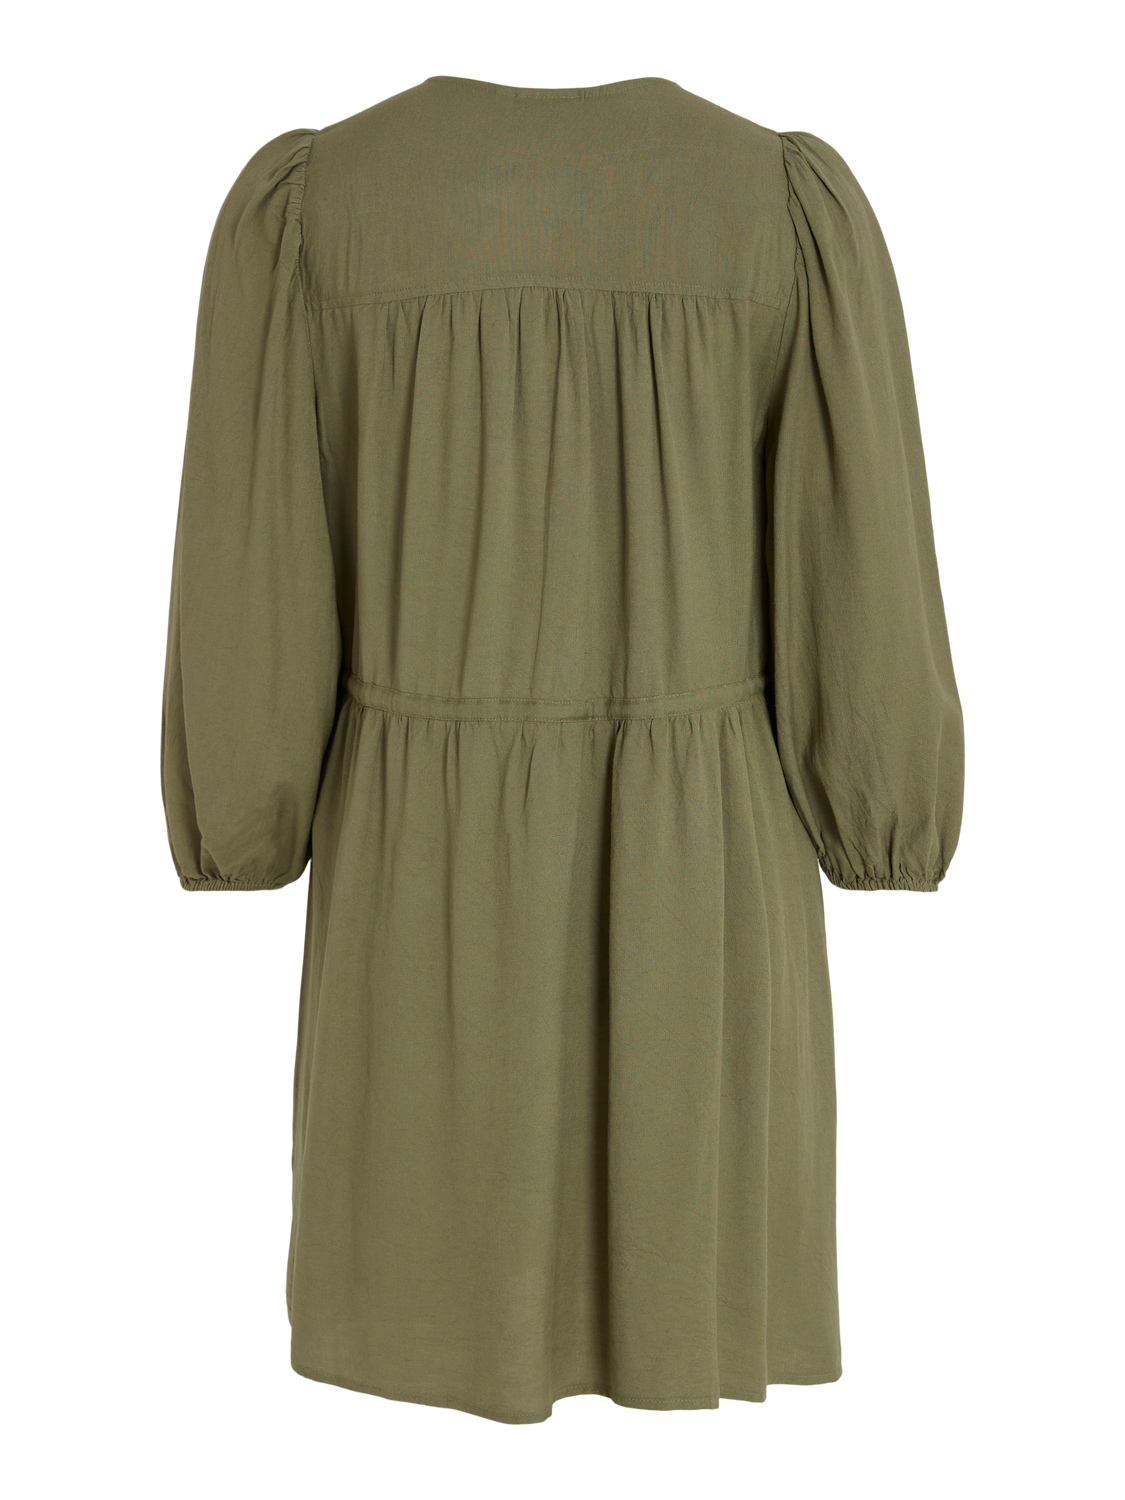 VIPRICIL Dress - Oil Green